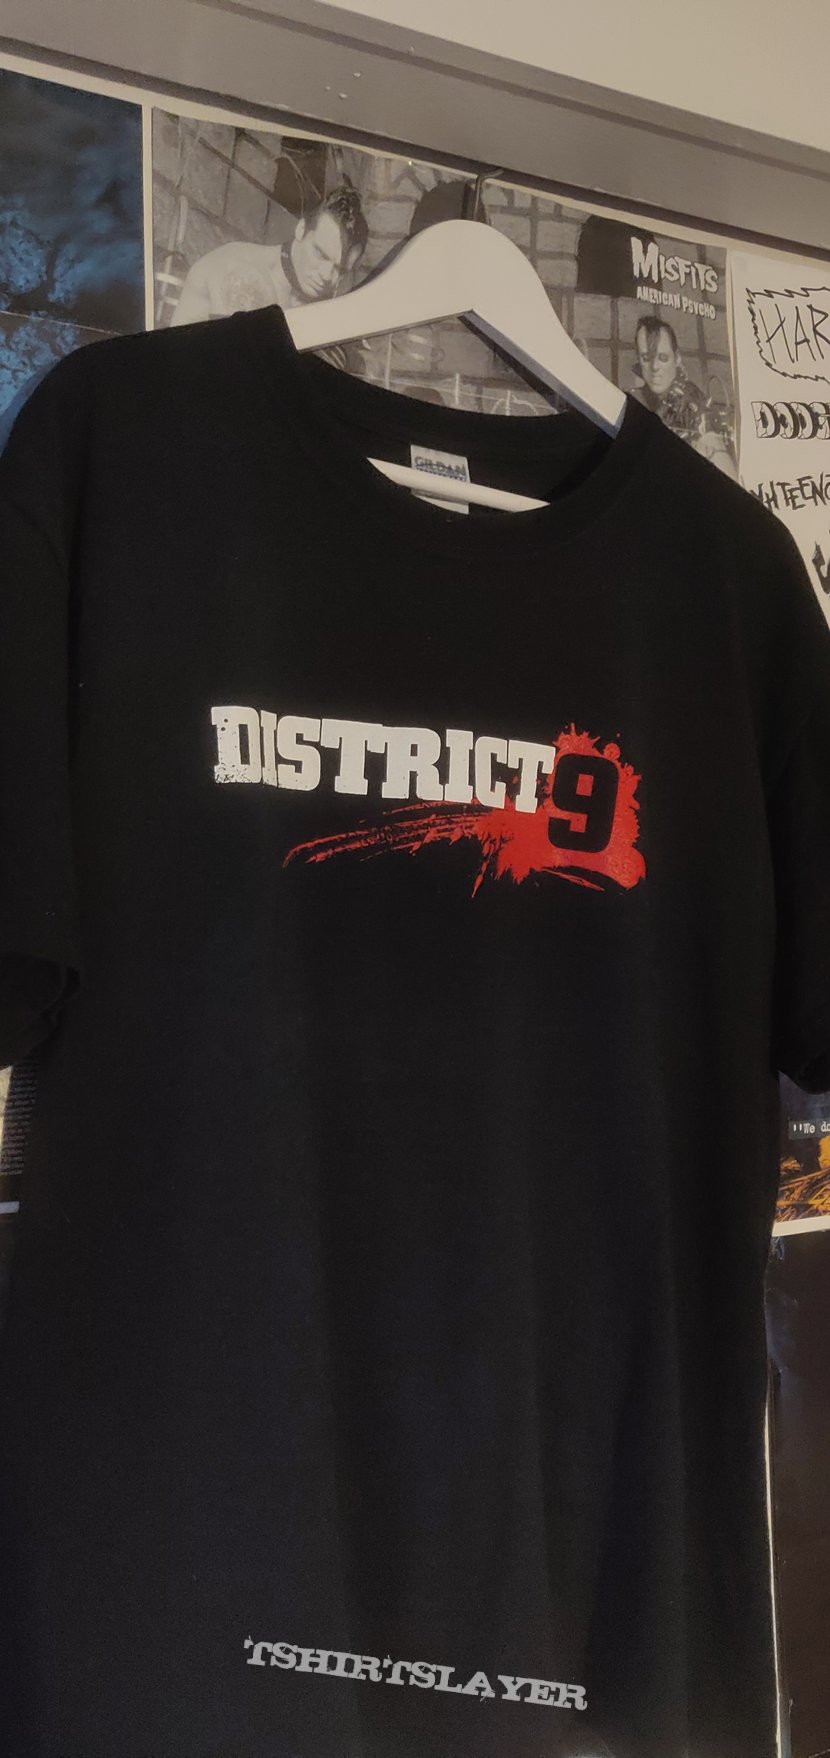 District 9 t-shirt